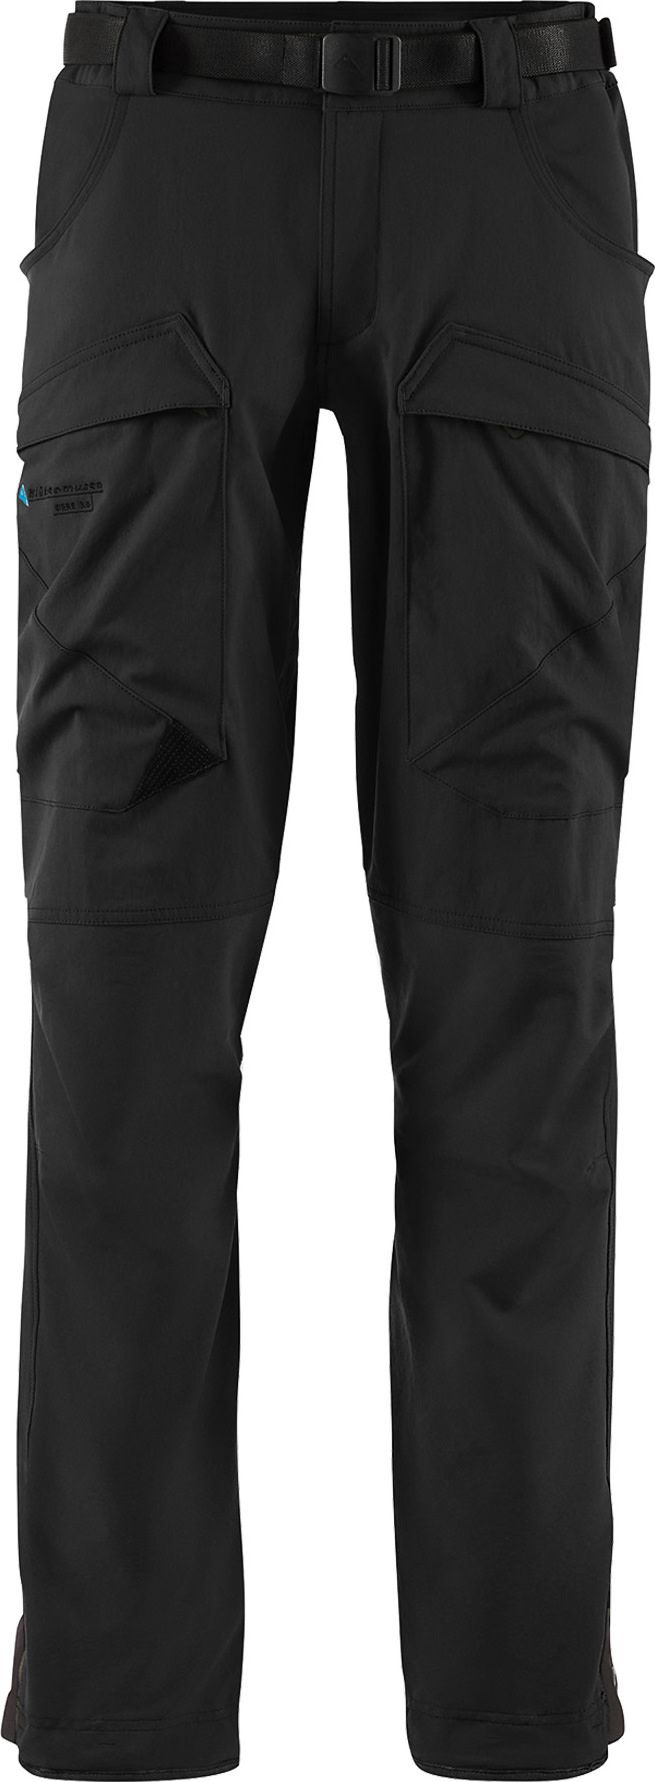 Men's Gere 3.0 Pants Regular Black